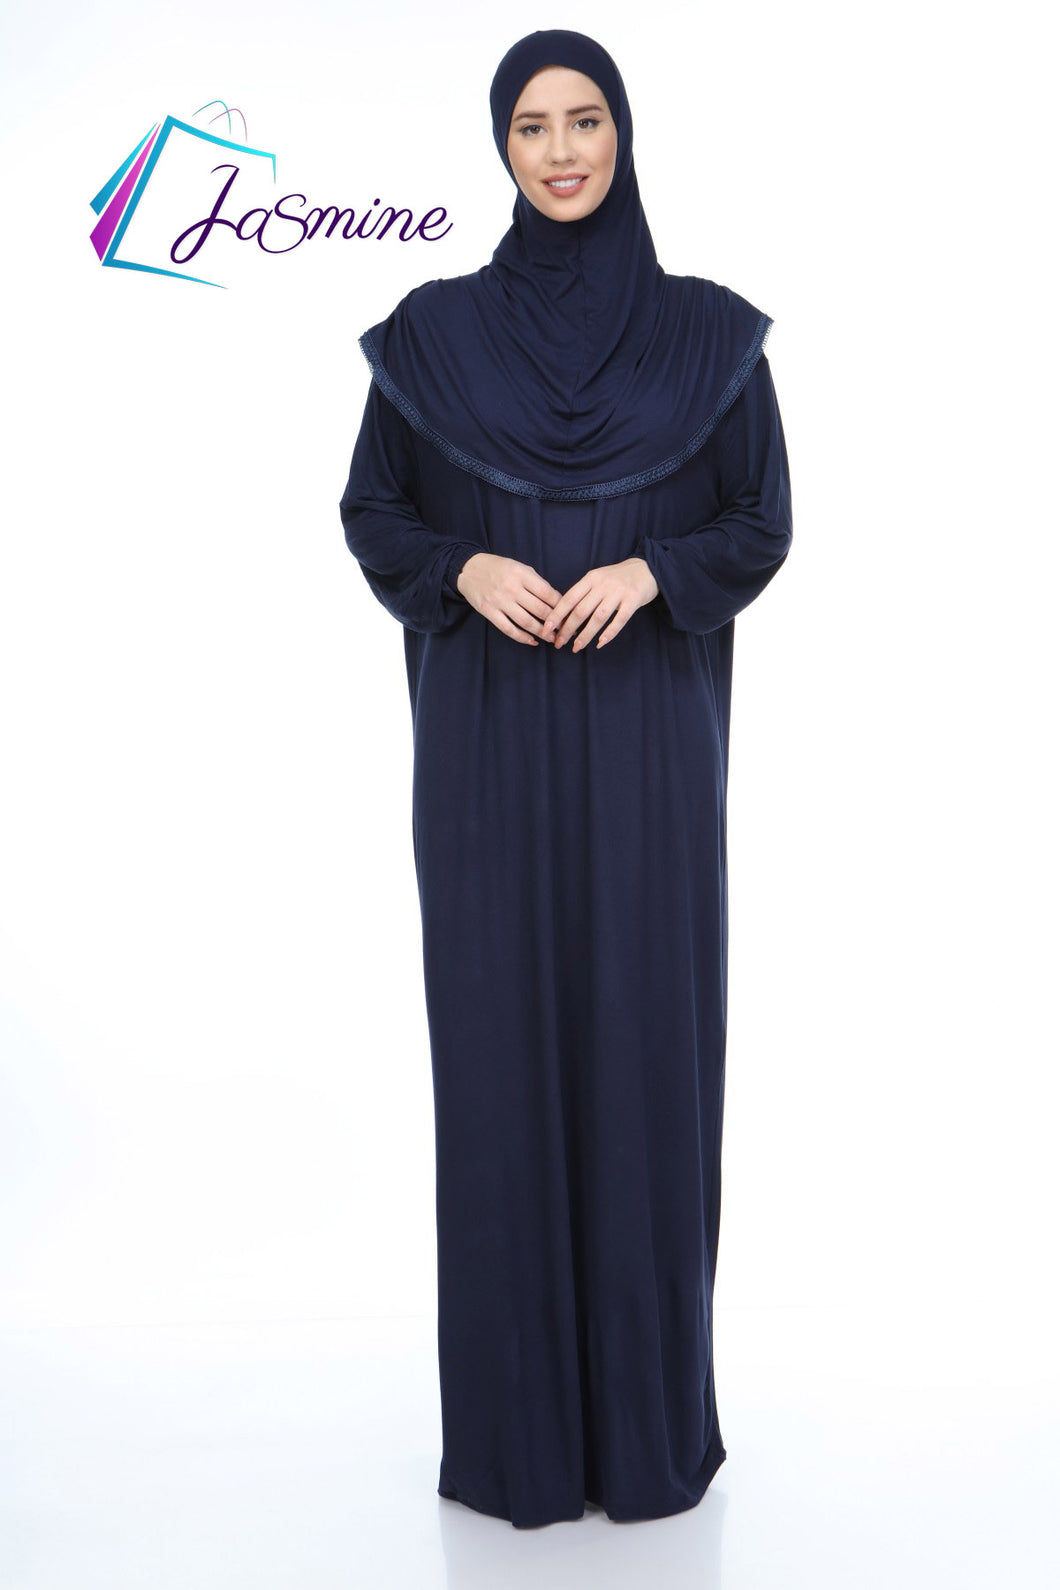 Women prayer clothes (Asdal) Adult size